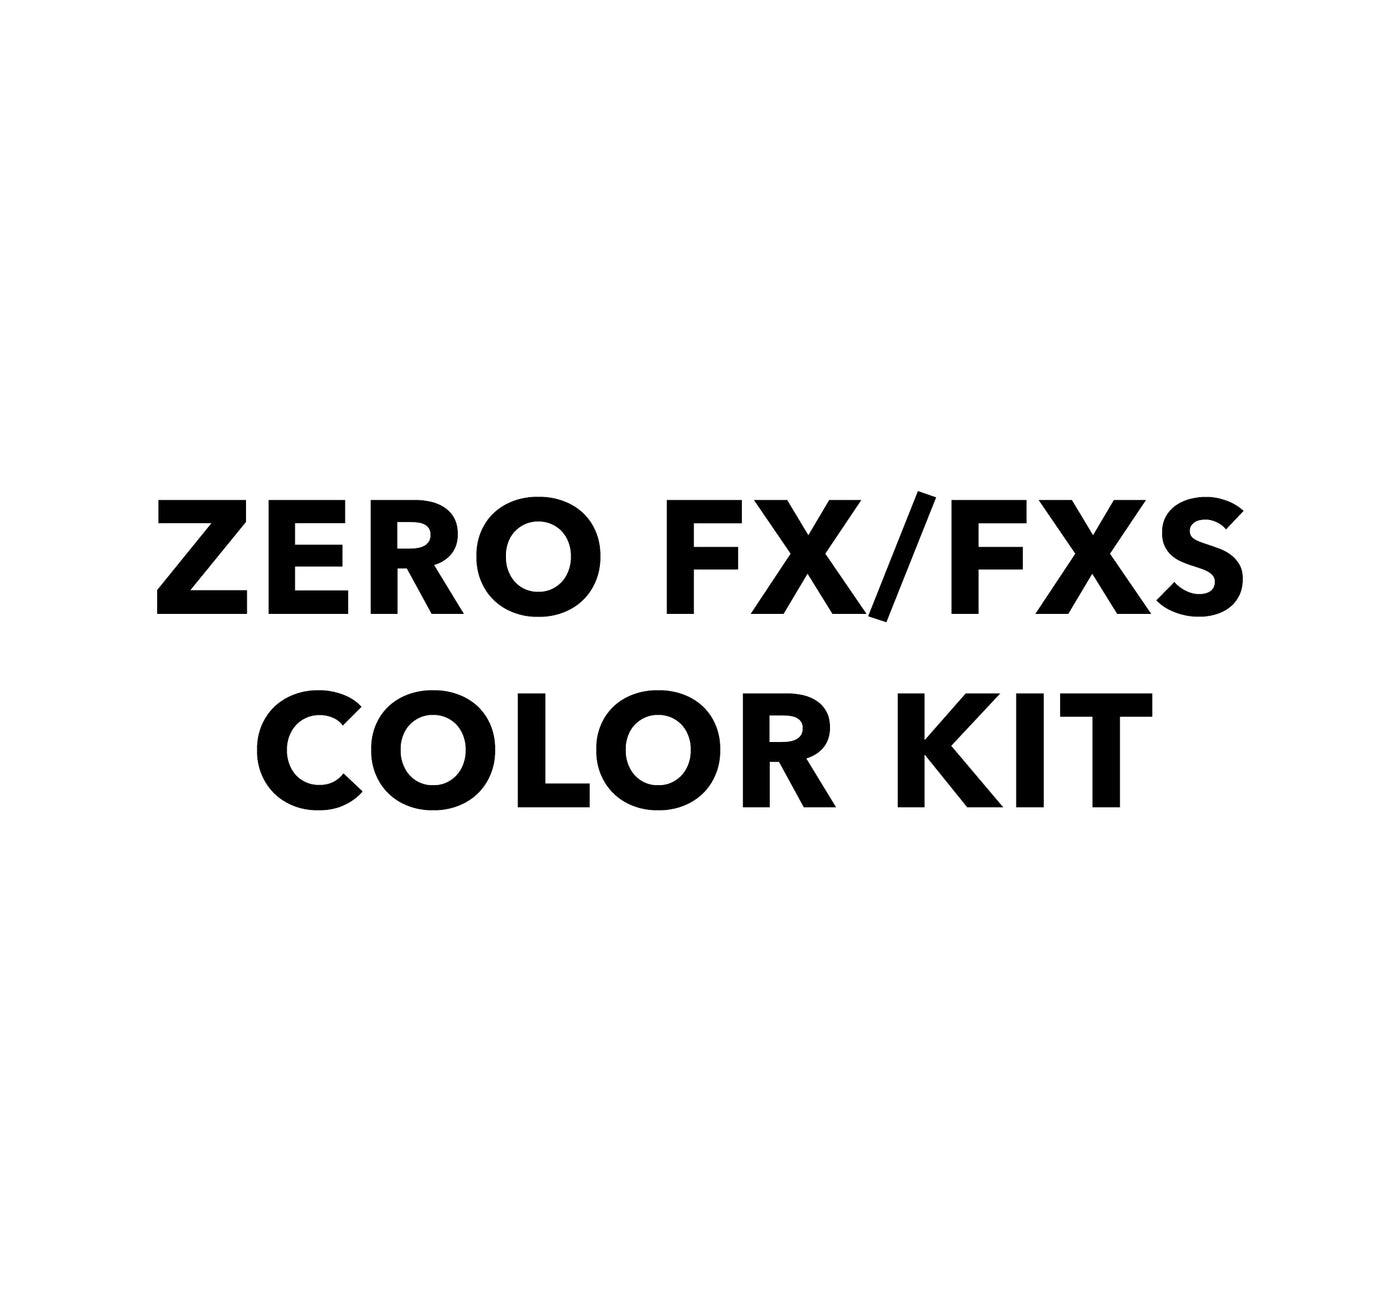 Zero FX/FXS Body Color Kit